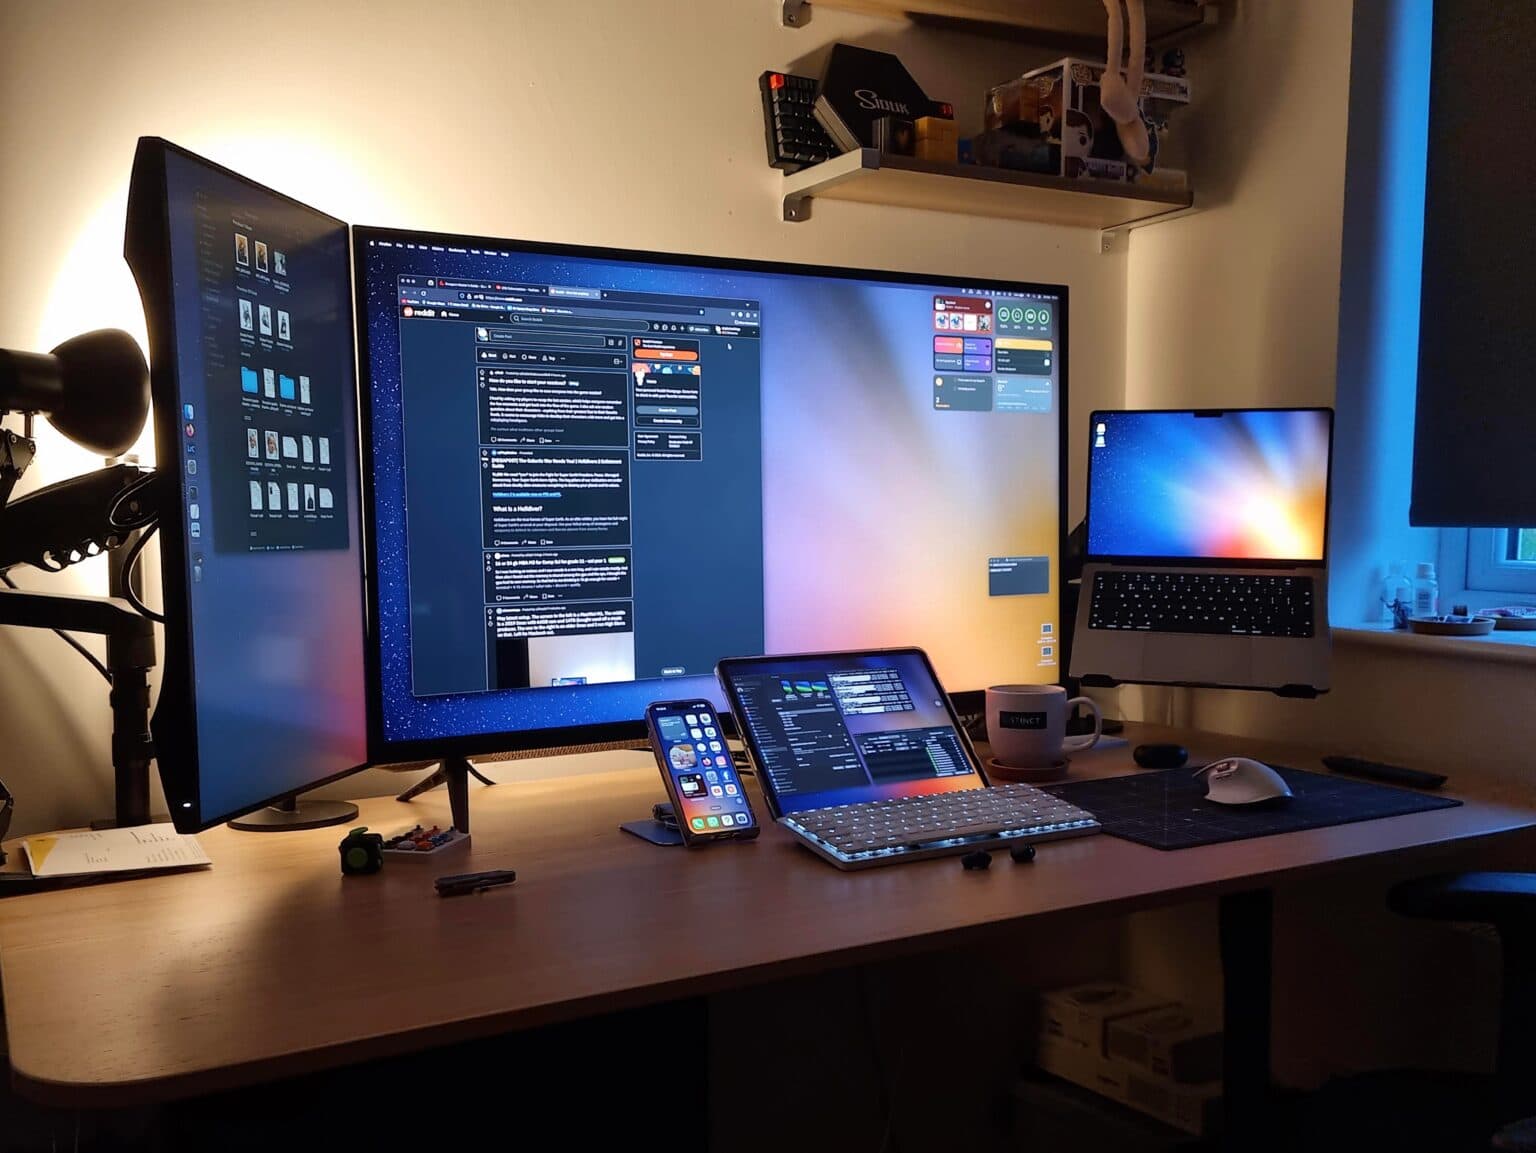 MacBook Pro and Anker dock setup